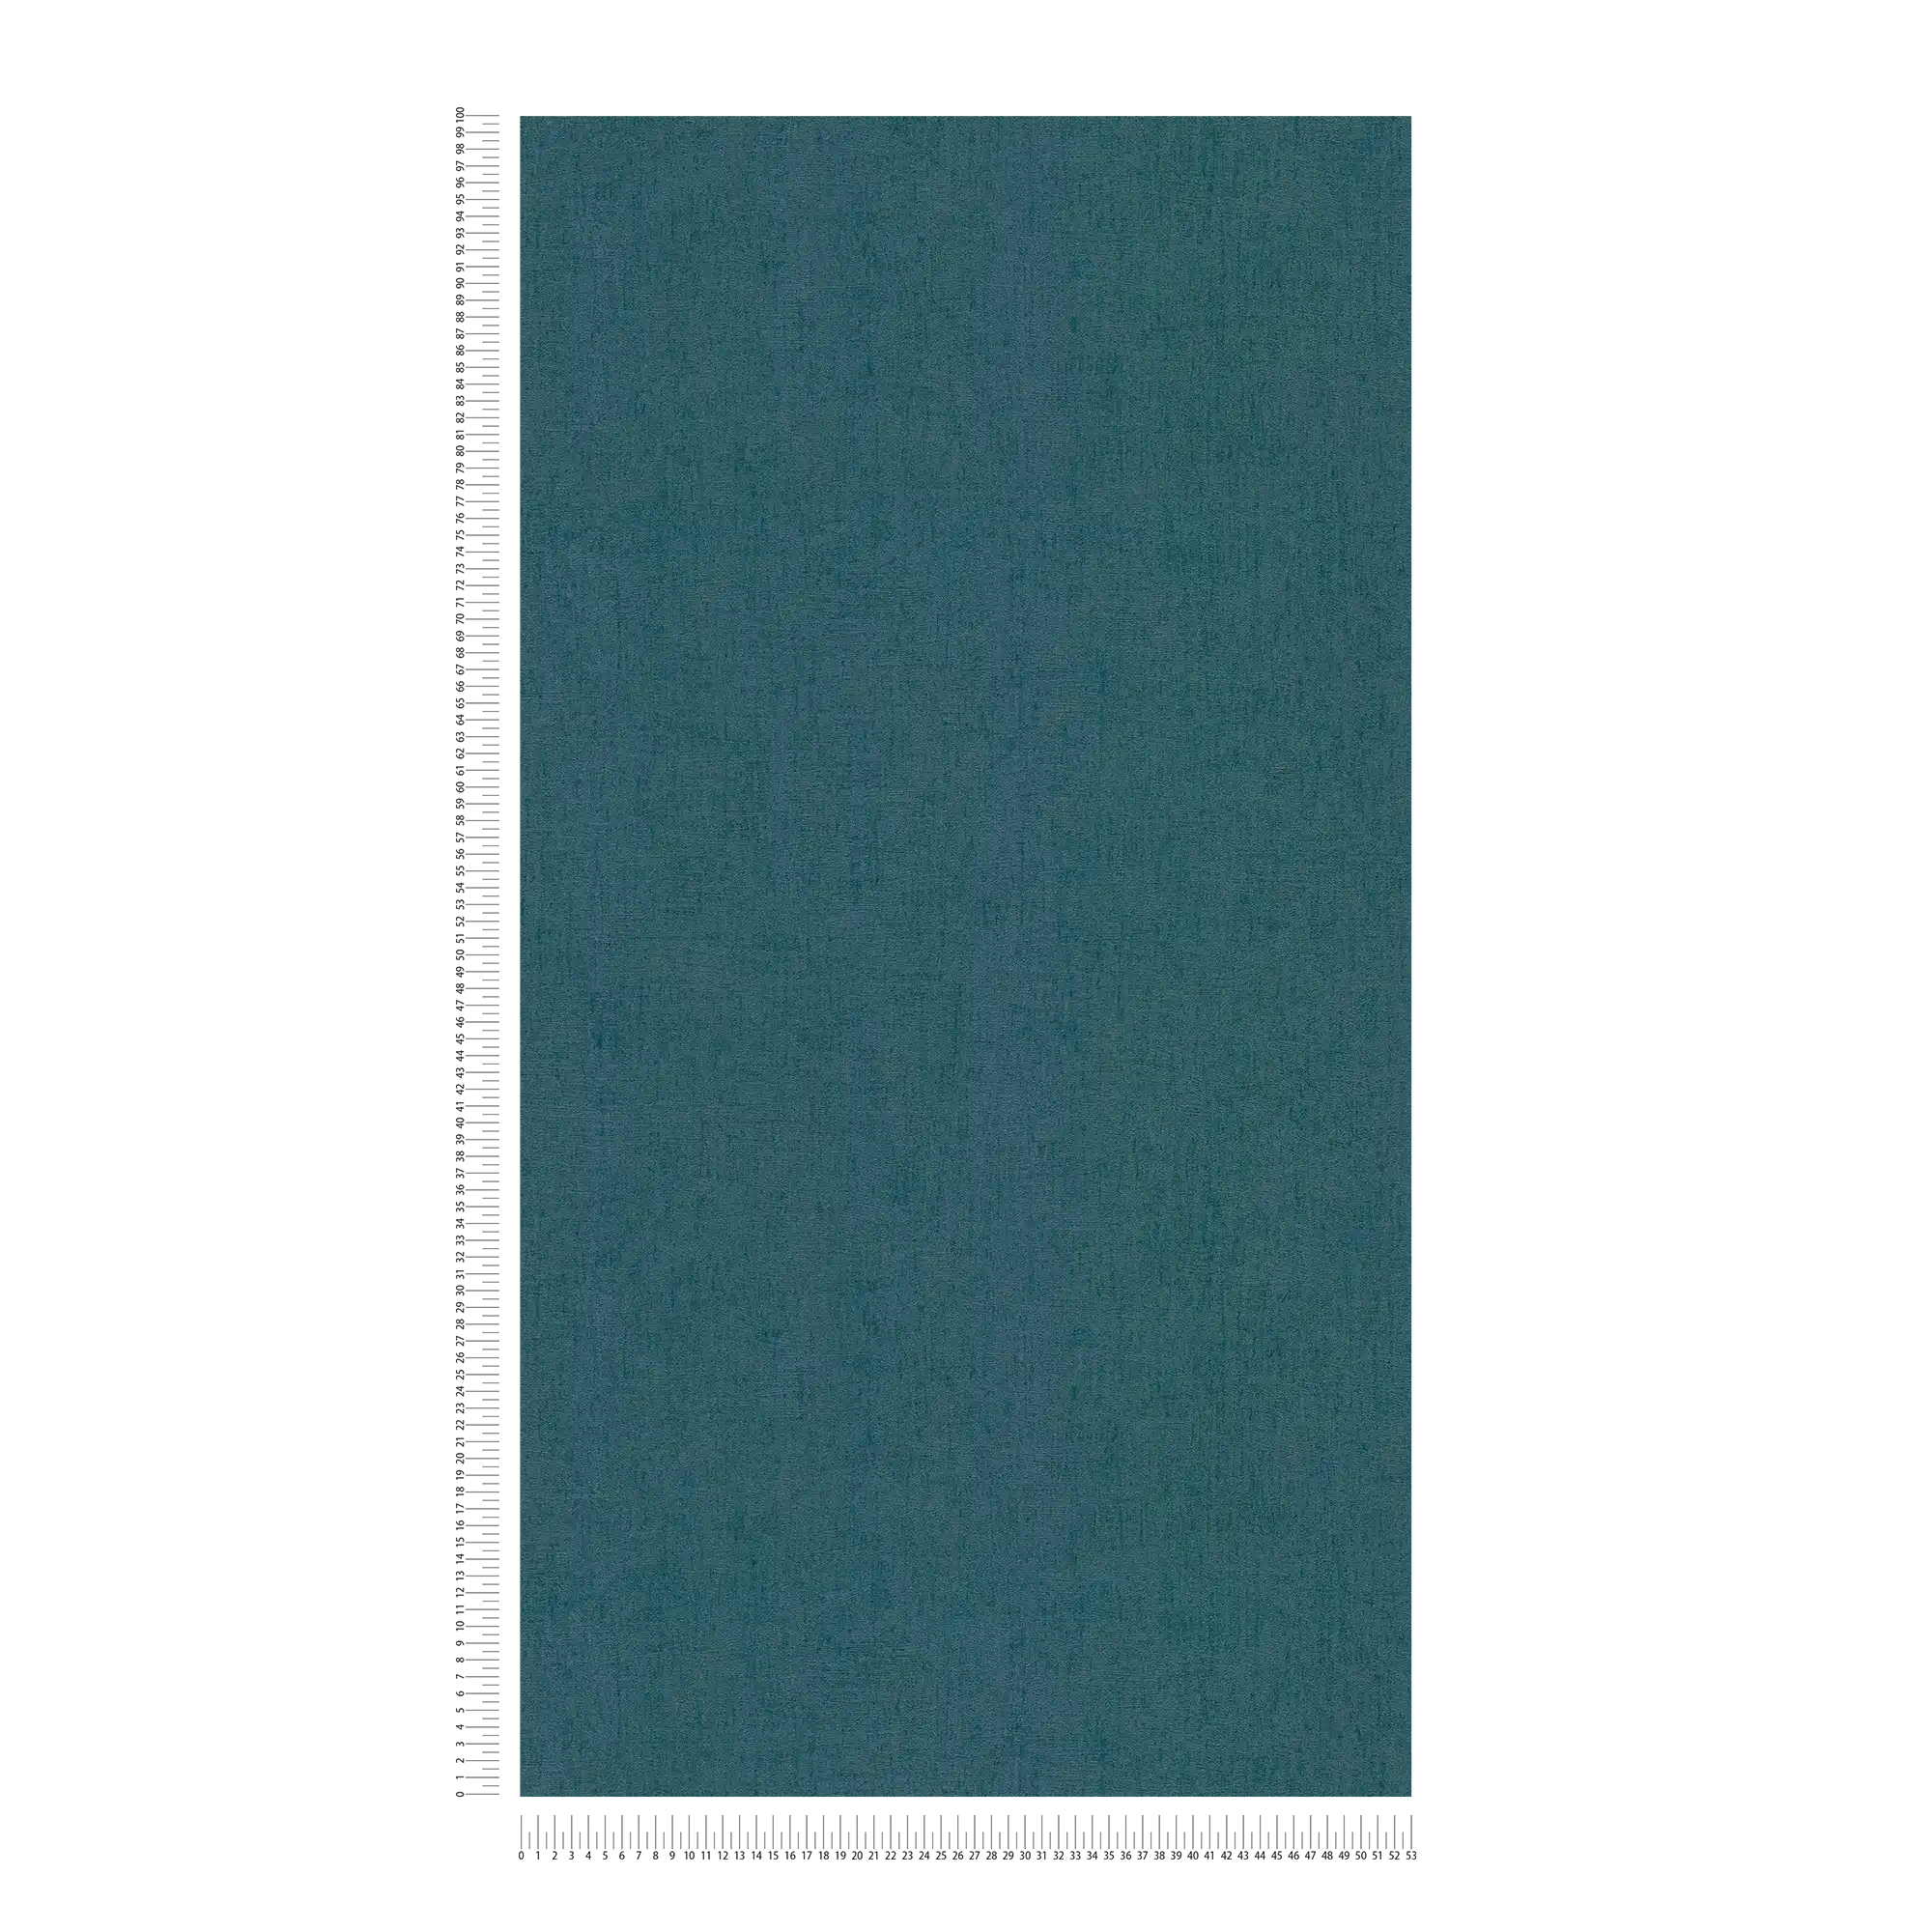             Structured wallpaper petrol with gloss effect - blue, green, metallic
        